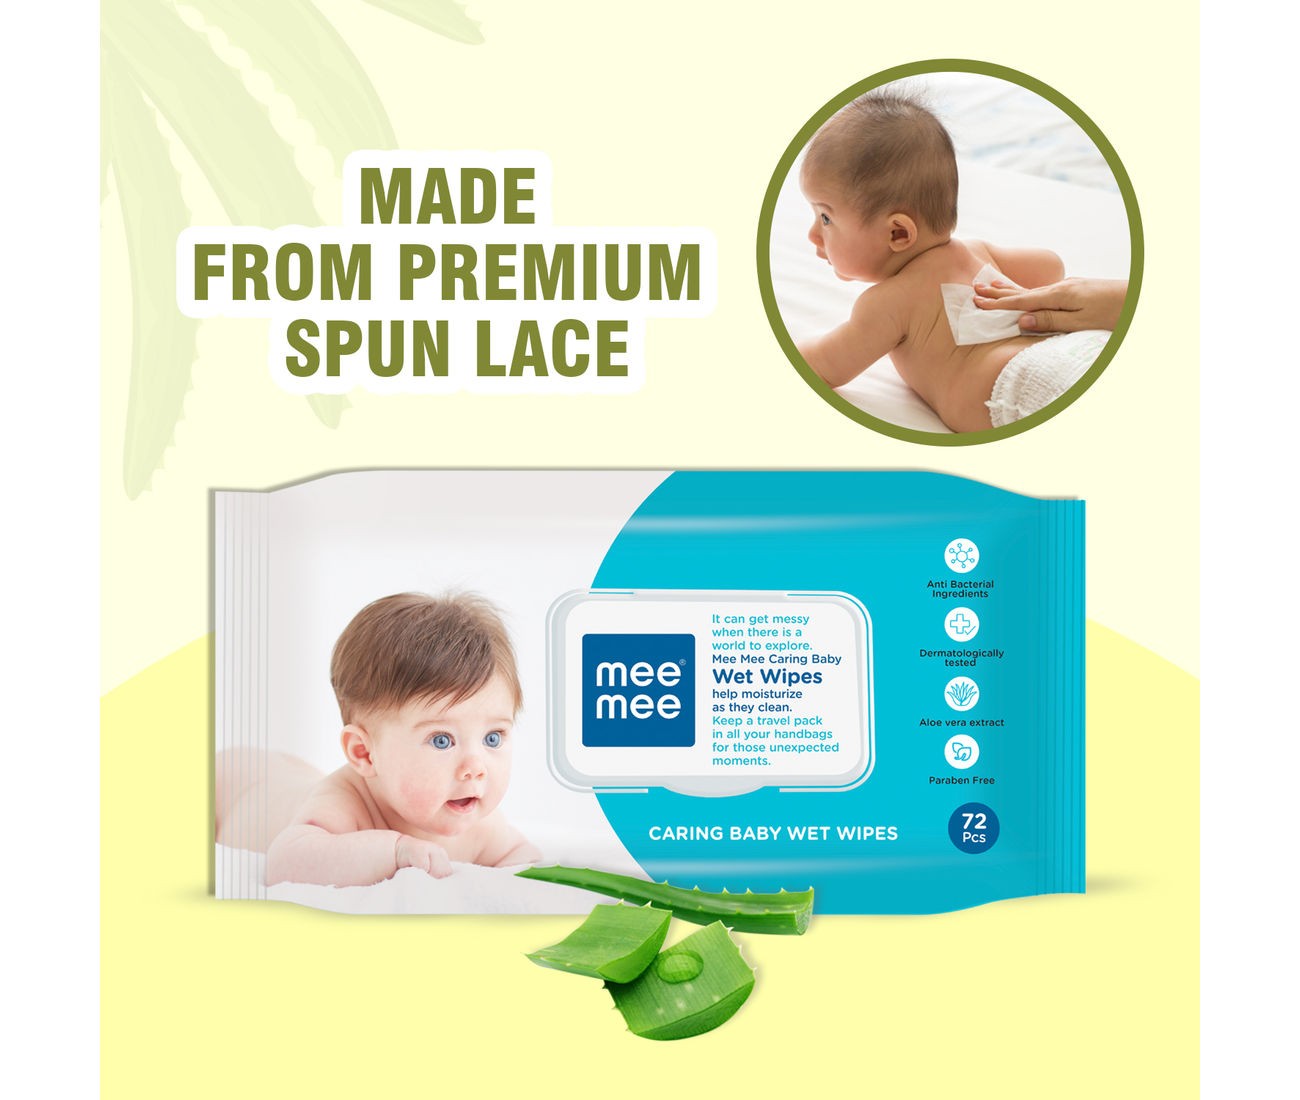 Buy Mee Mee Caring Baby Wet Wipes with lid, 72 Pcs (Aloe Vera